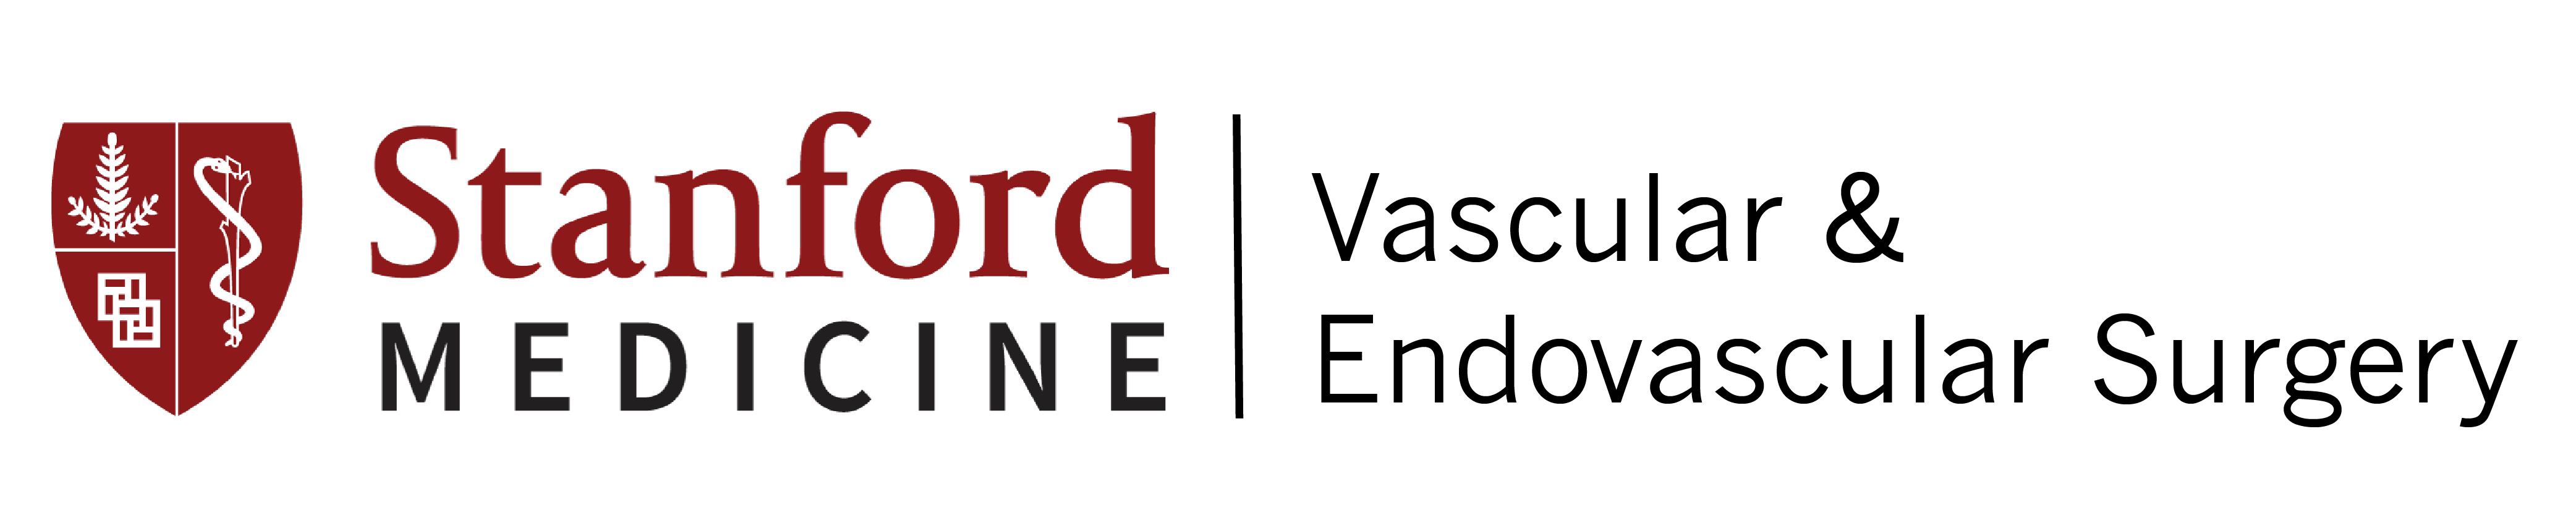 Stanford Logo Vascular Surgery fond blanc-2